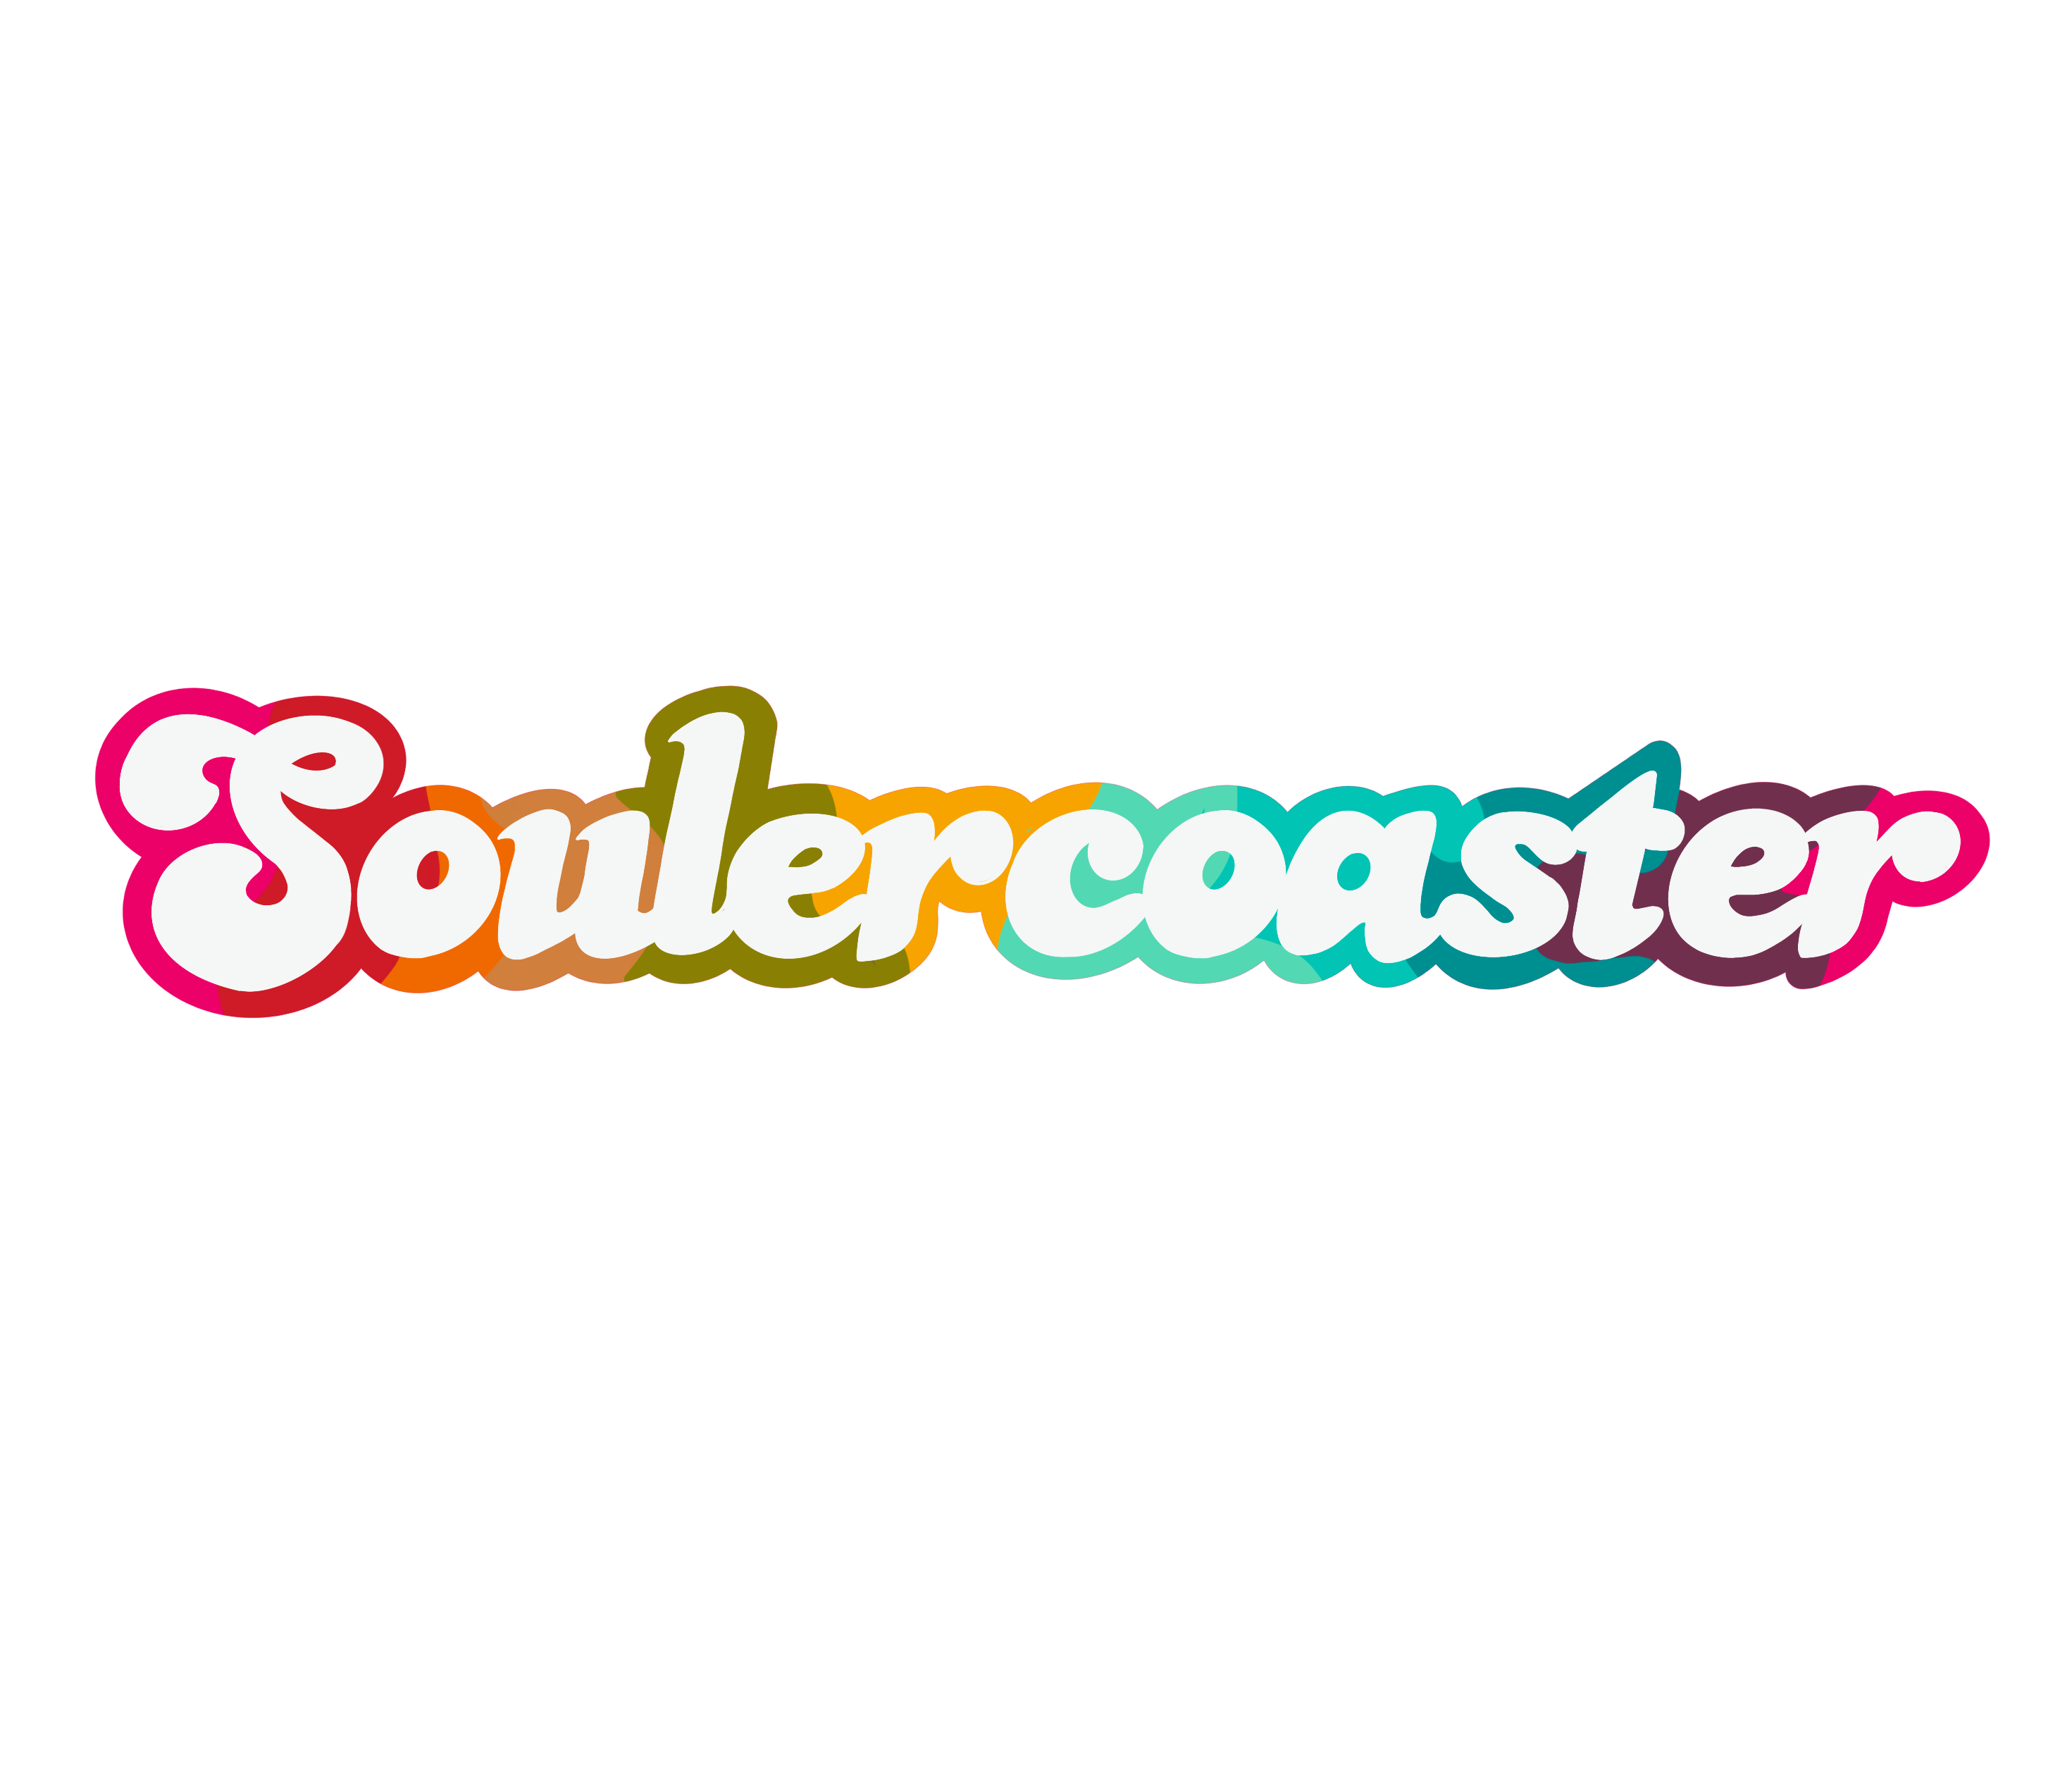 Soulercoaster